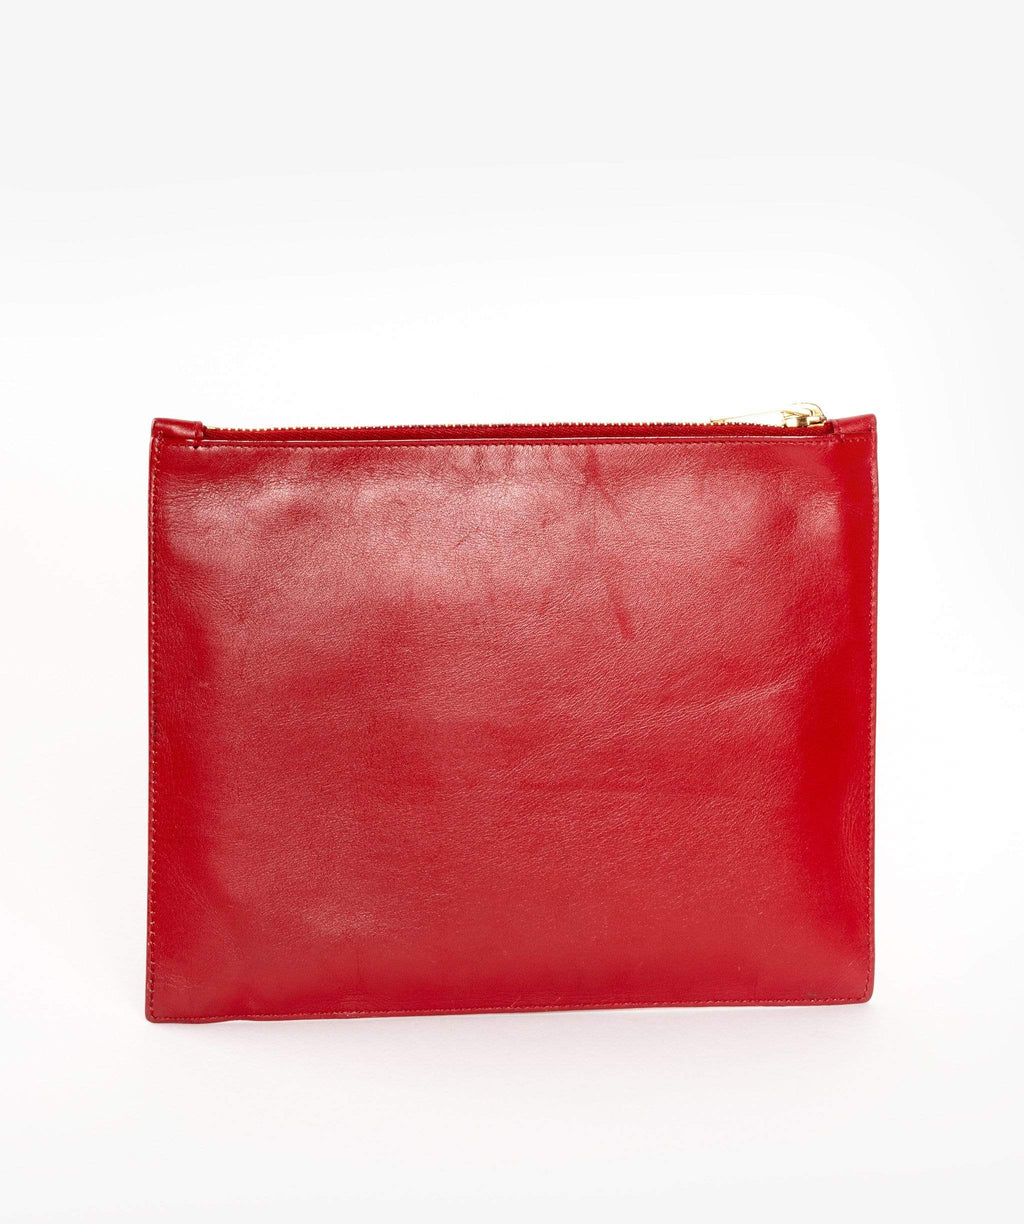 Yves Saint Laurent | Bags | Ysl College Bag Red | Poshmark